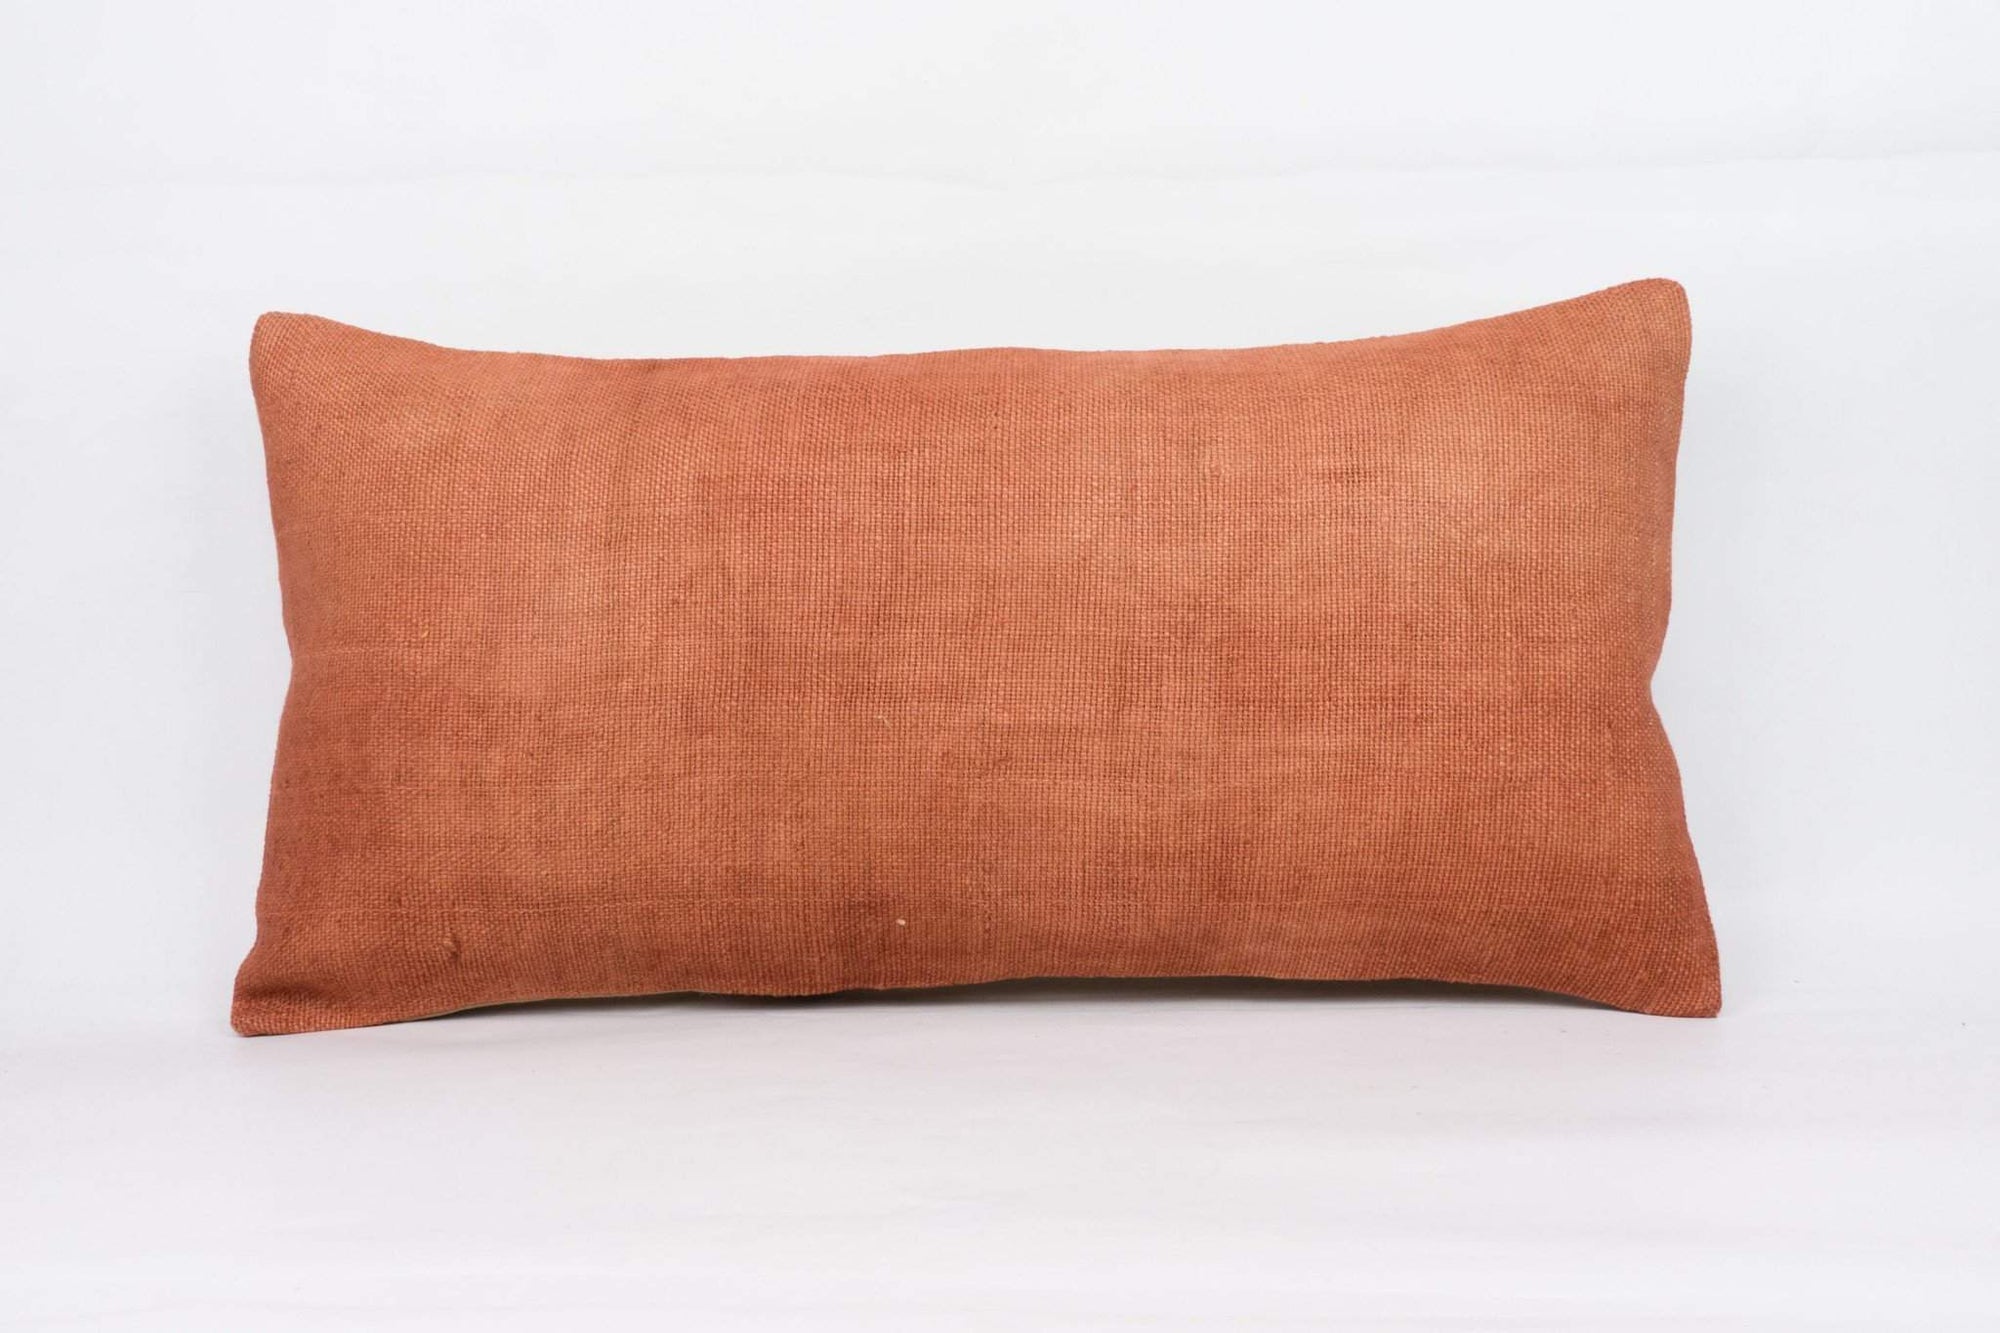 Plain Brown Kilim Pillow Cover 12x24 4198 - kilimpillowstore
 - 1